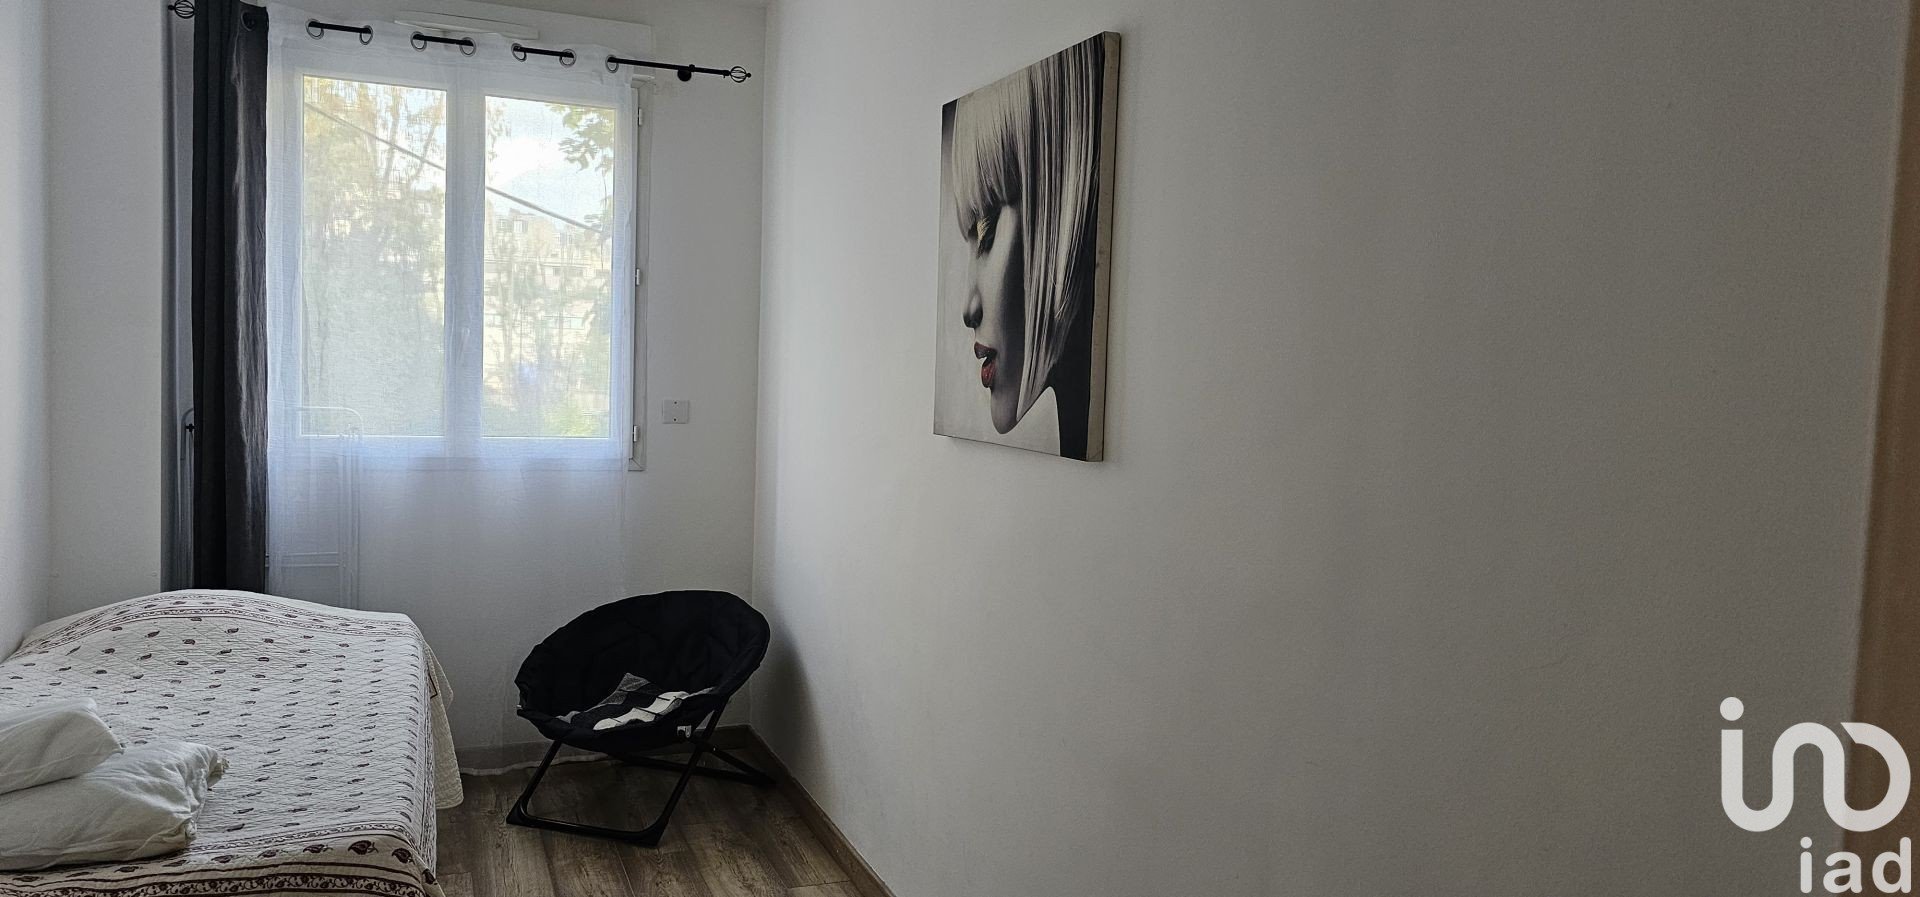 Appartement a louer neuilly-sur-seine - 3 pièce(s) - 71 m2 - Surfyn